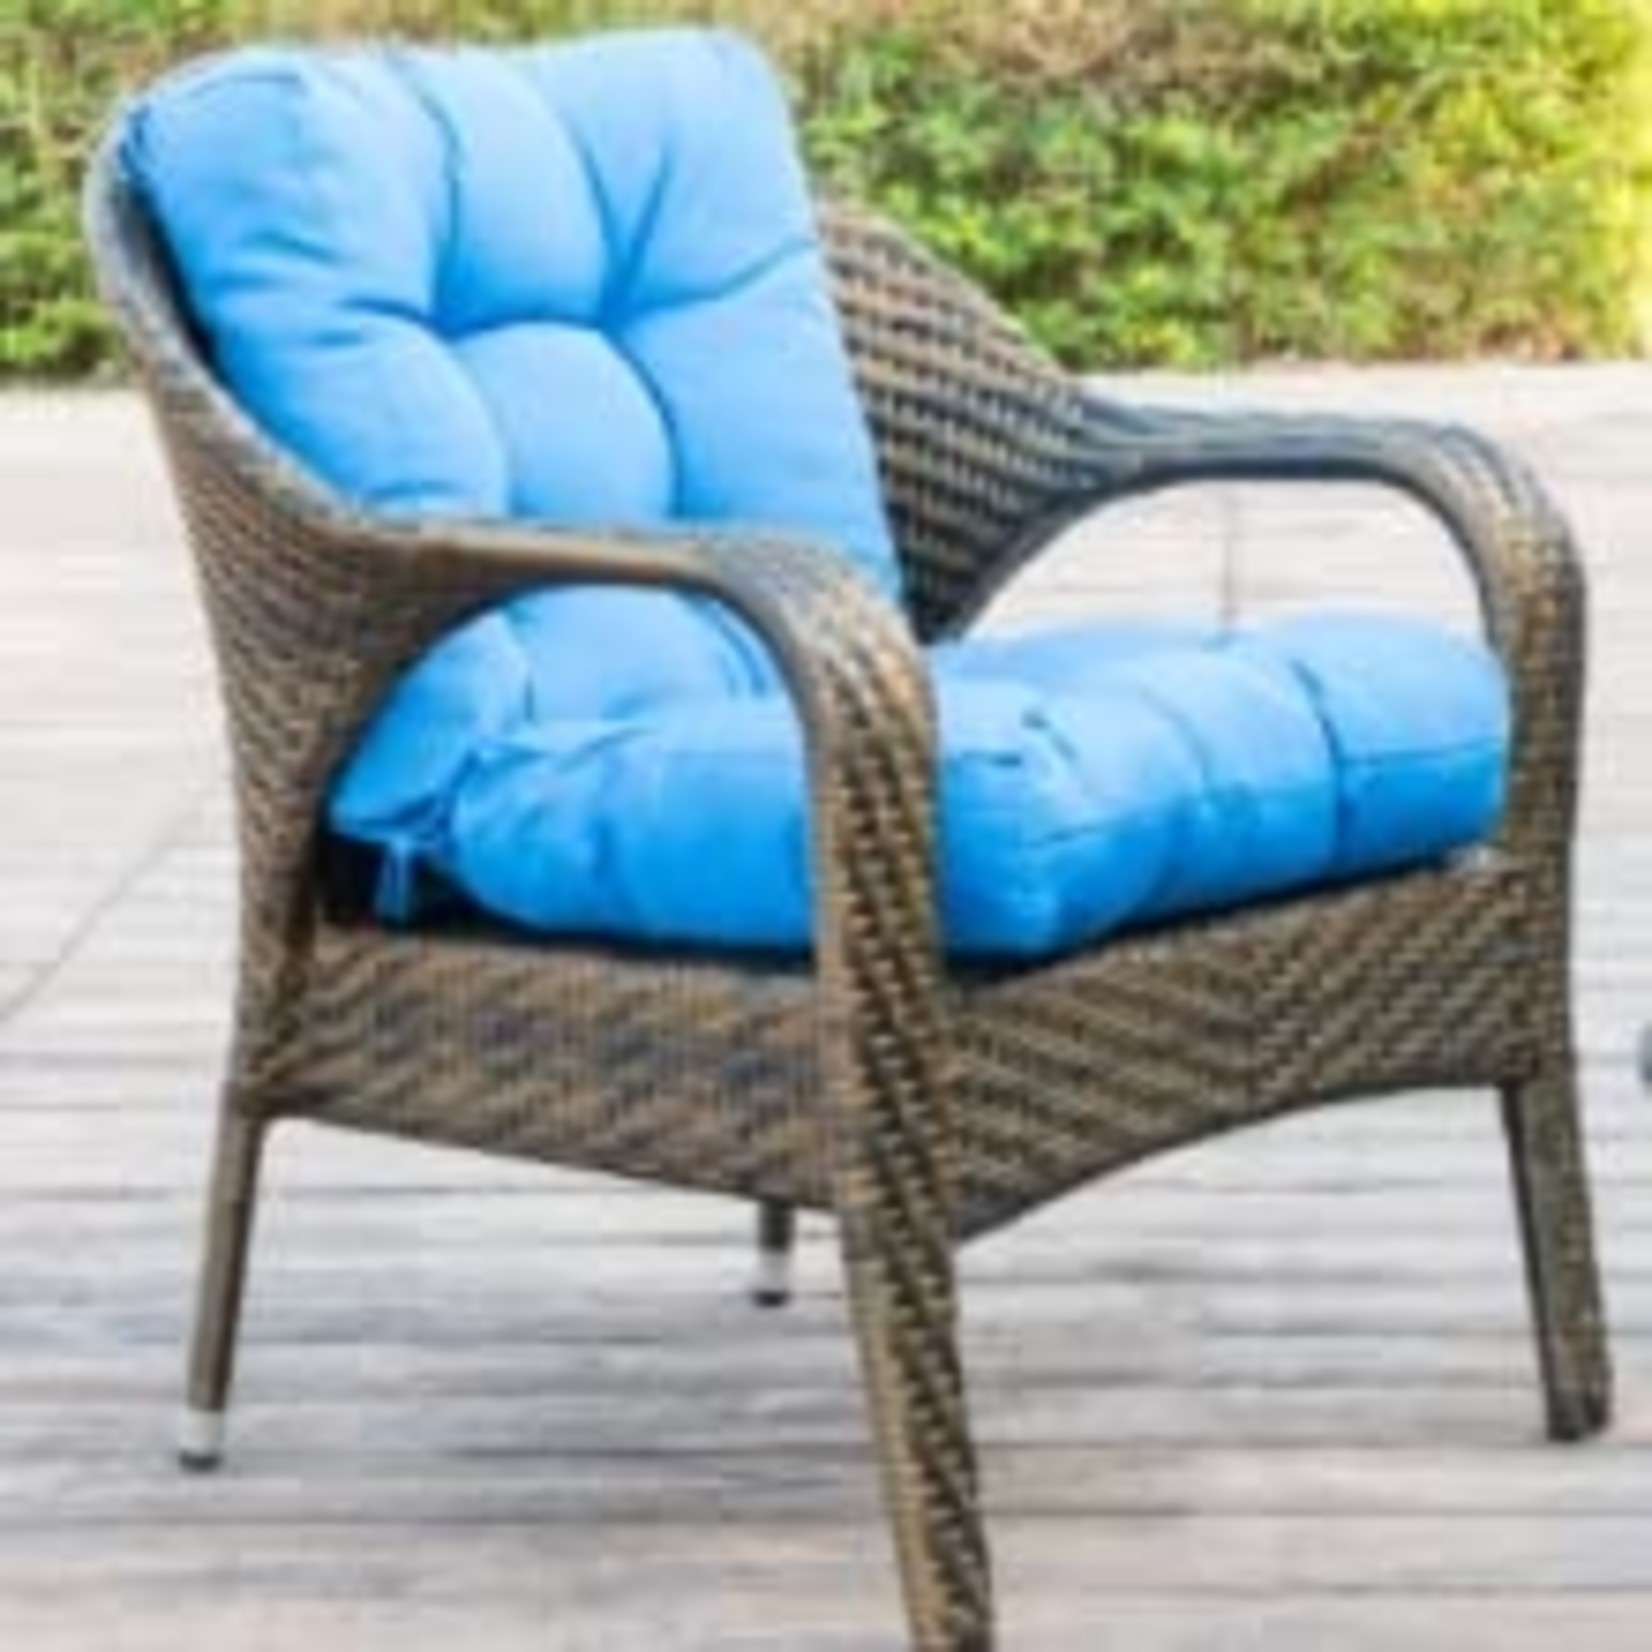 Qilloway Chair Cushion- Seat & Back- Khaki & White Stripe